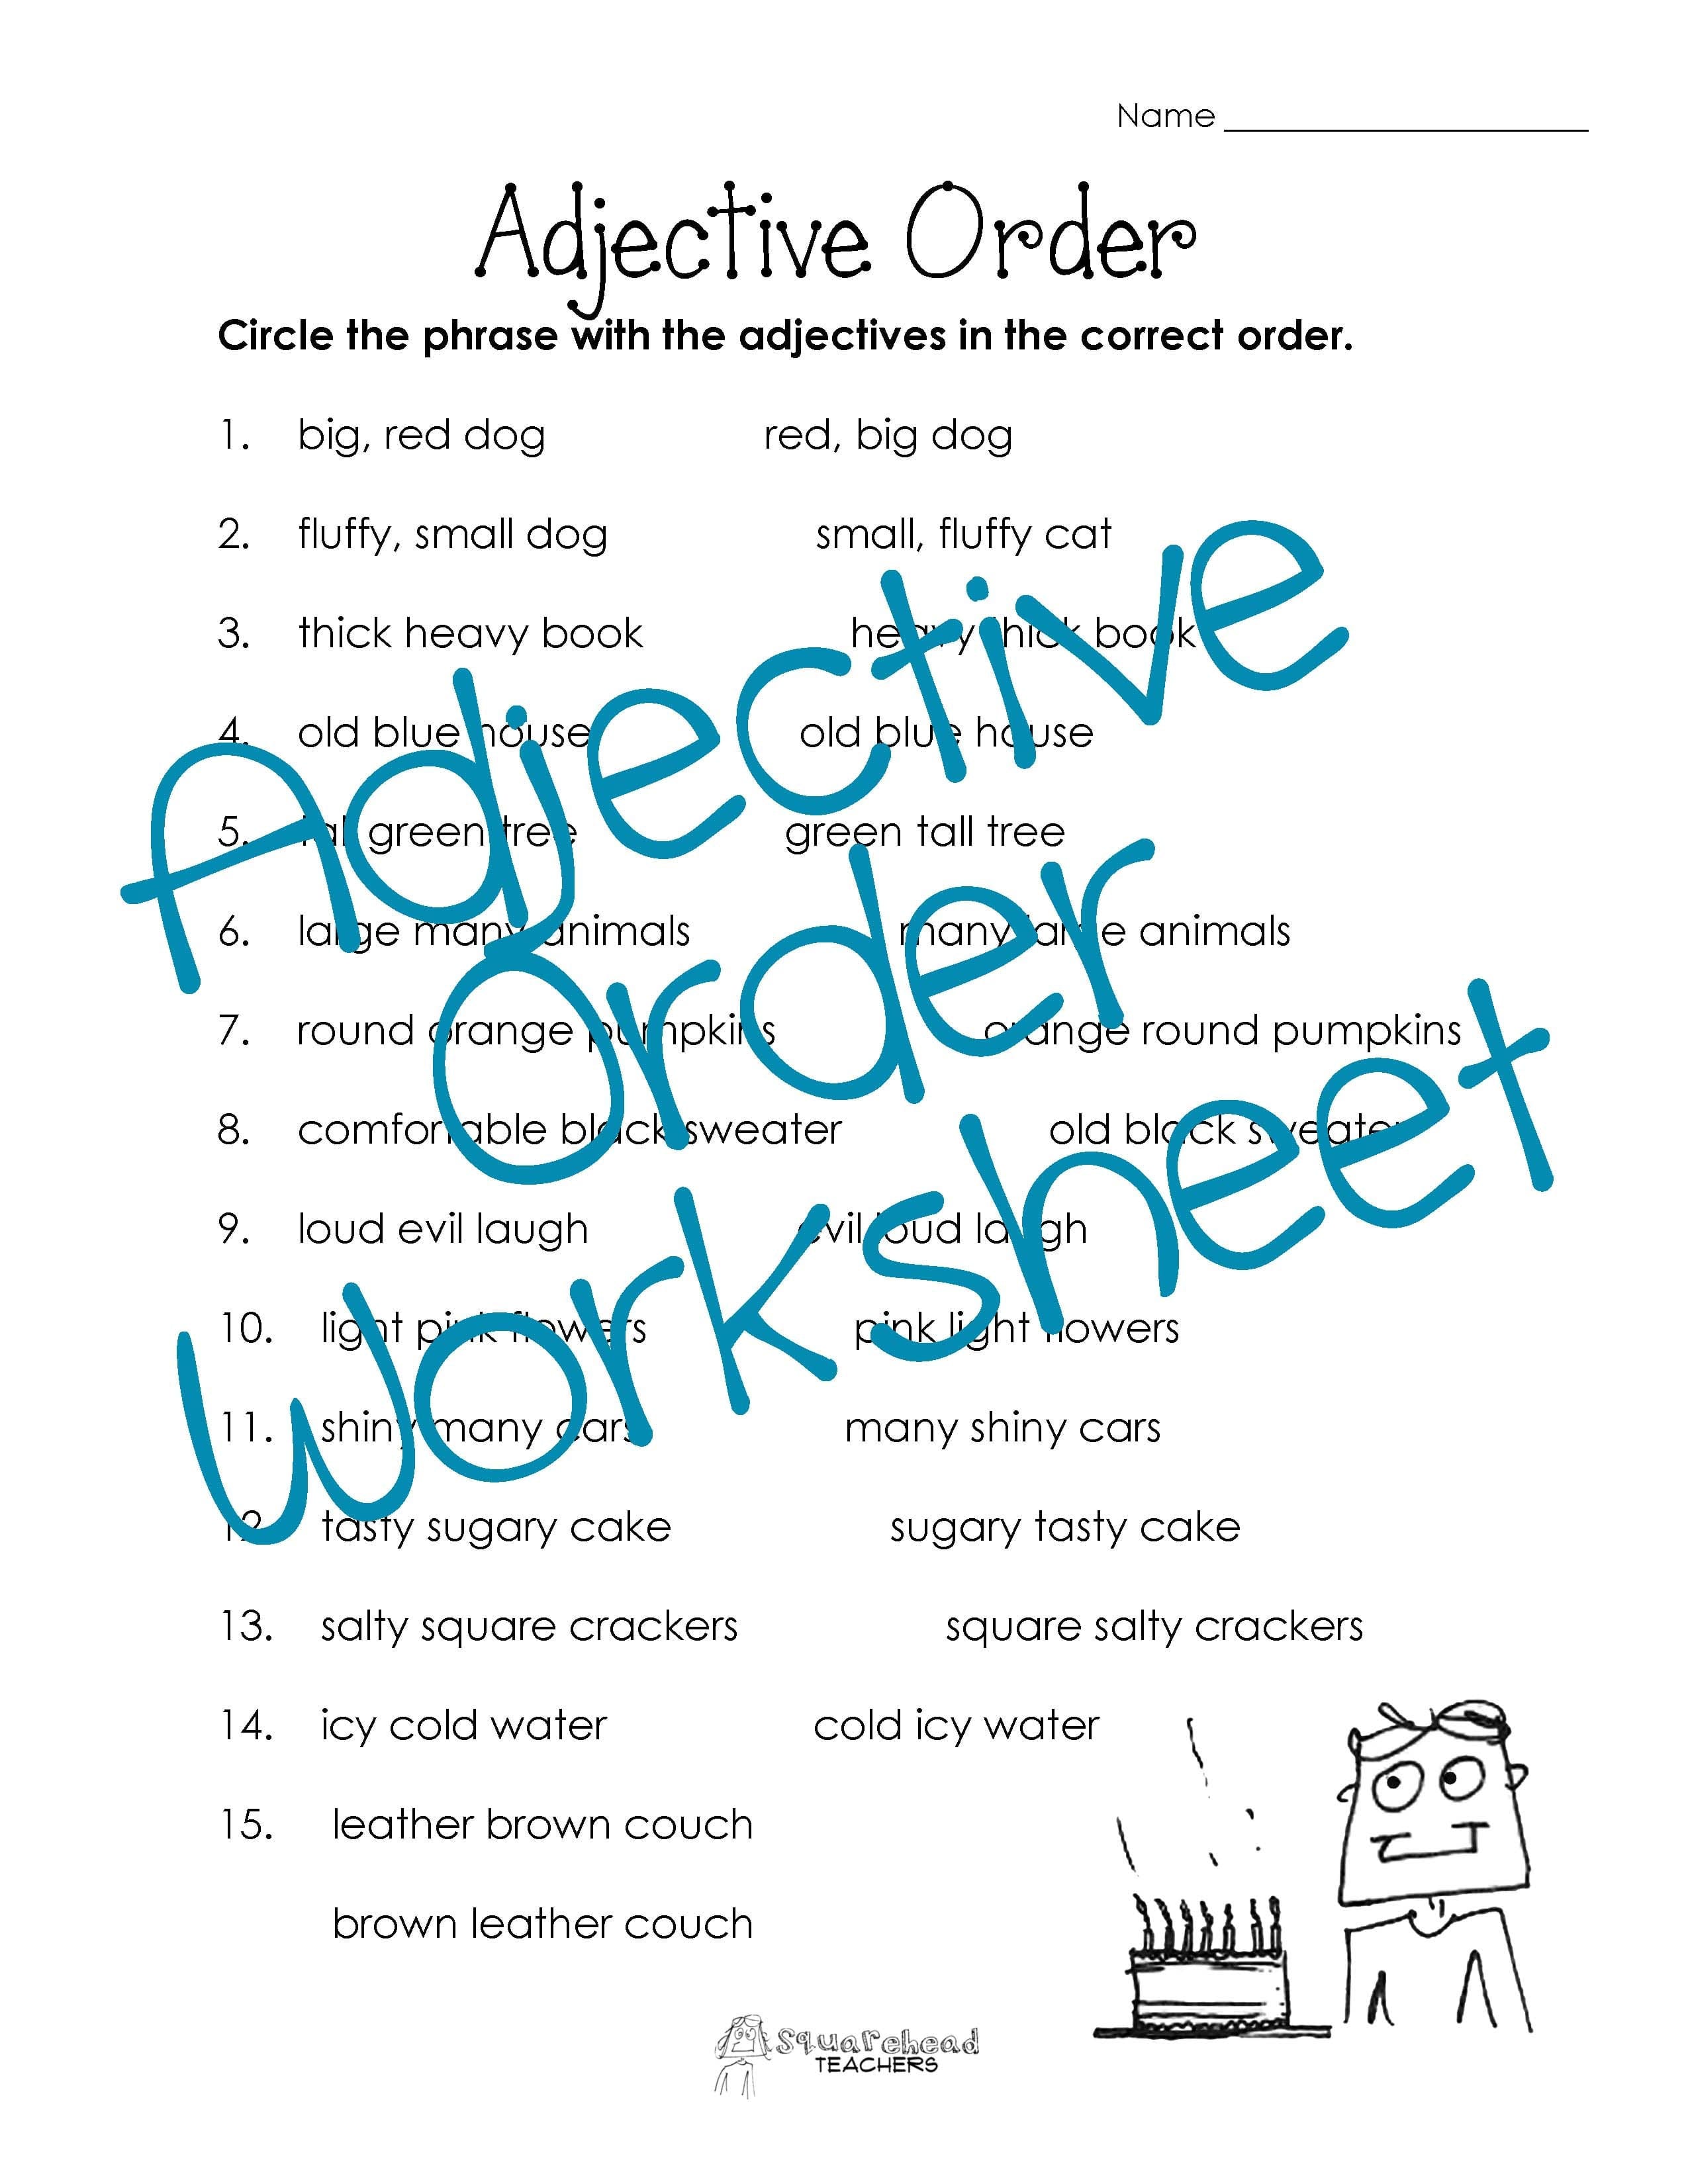 adjective-order-worksheet-free-squarehead-teachers-db-excel